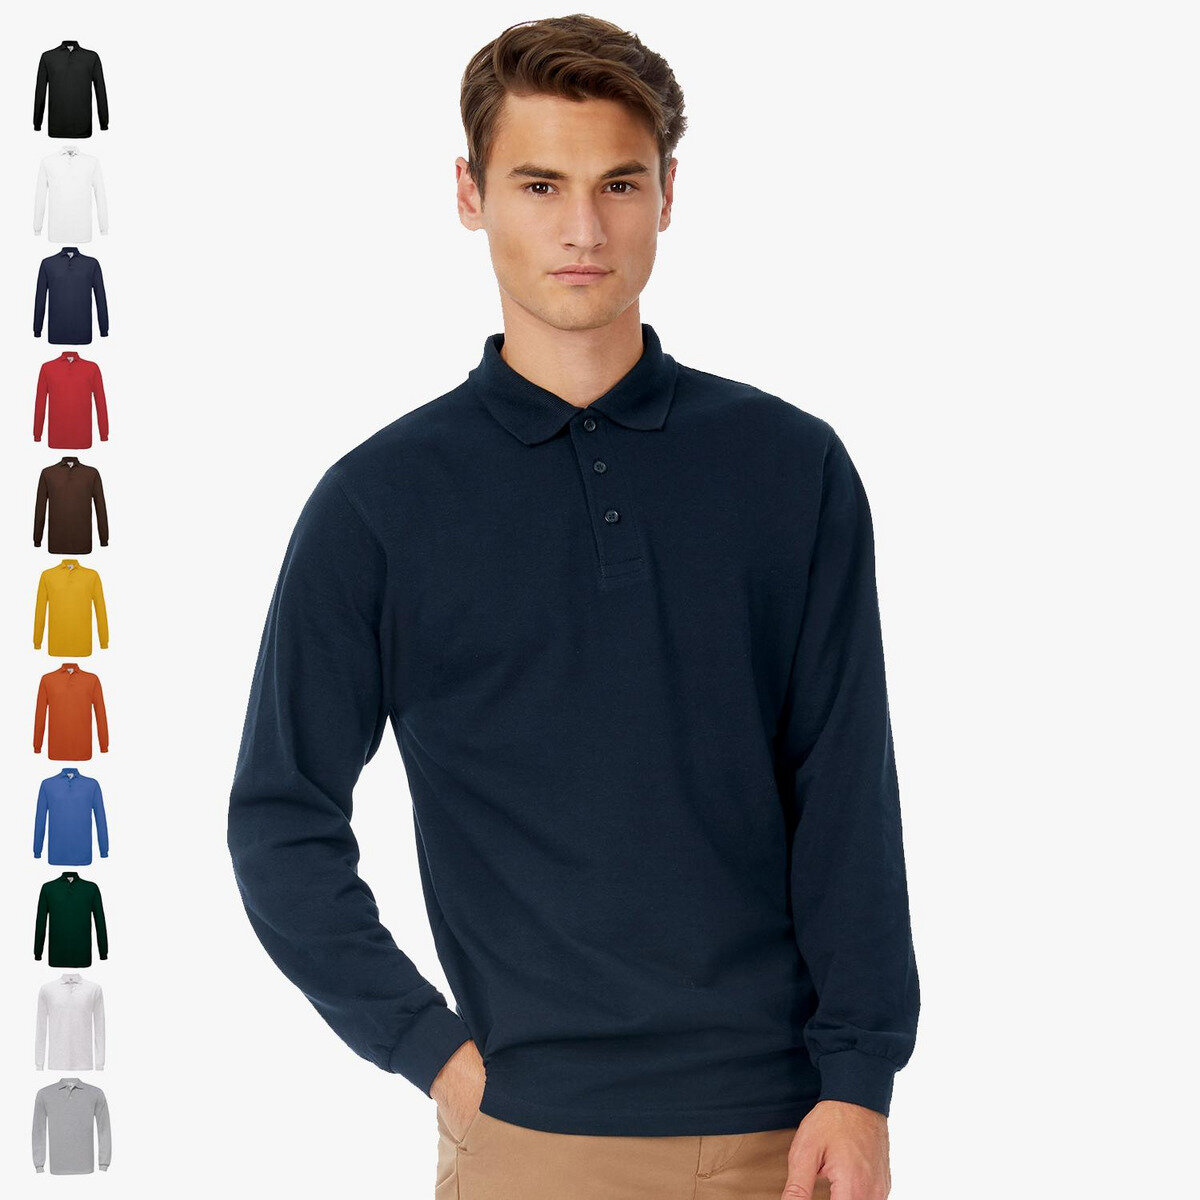 B&C Herren Poloshirt Langarm Longsleeve Polo Shirt Baumwolle S M L XL 2XL 